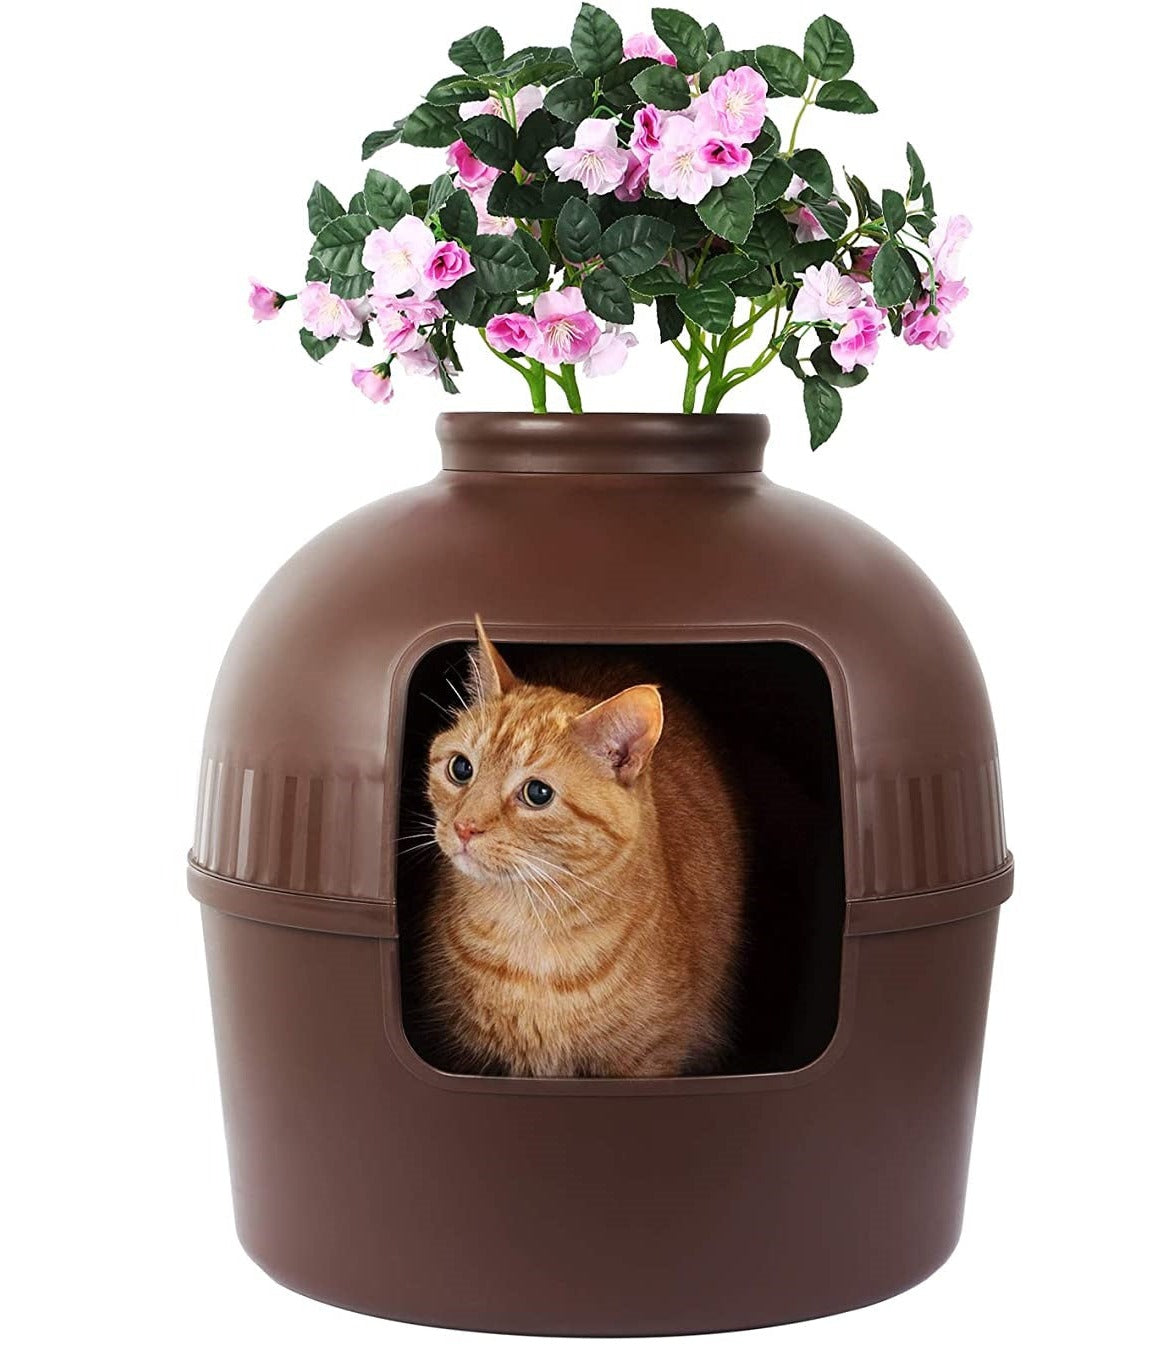 Plant Cat Litter Box - Cat litter Box